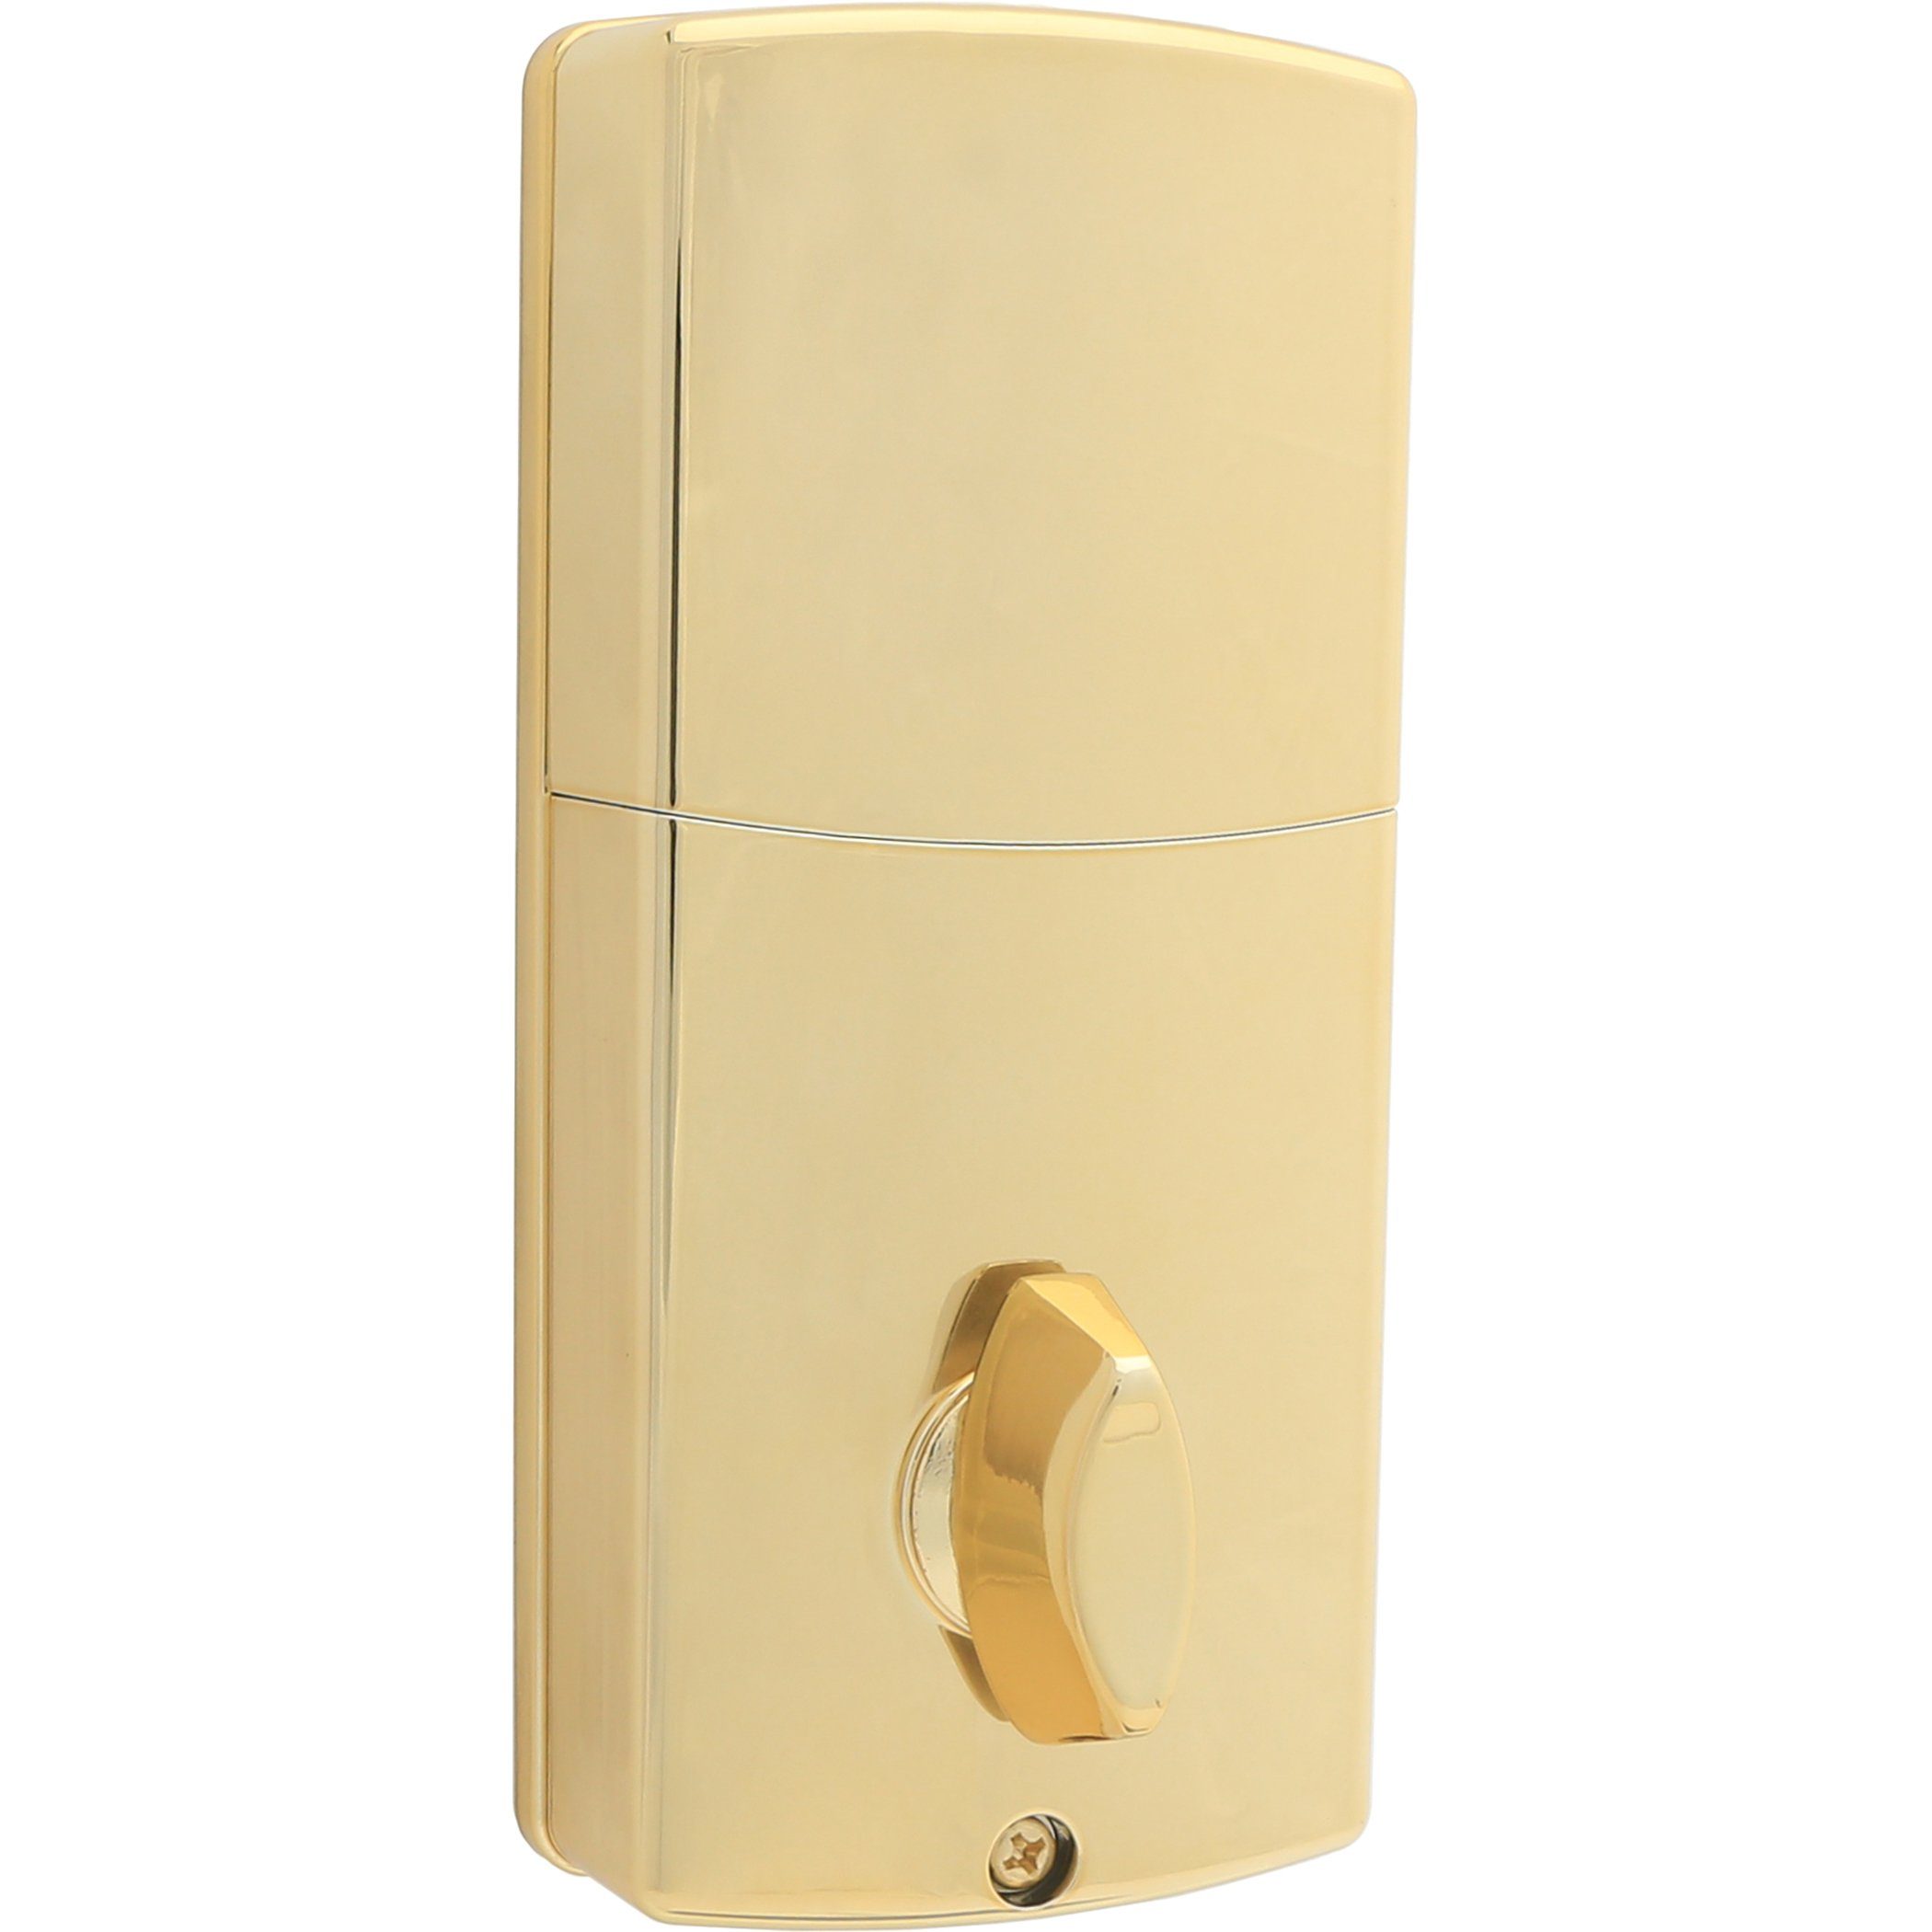 Honeywell 8712009 Electronic Deadbolt Door Lock with Keypad in Polished Brass